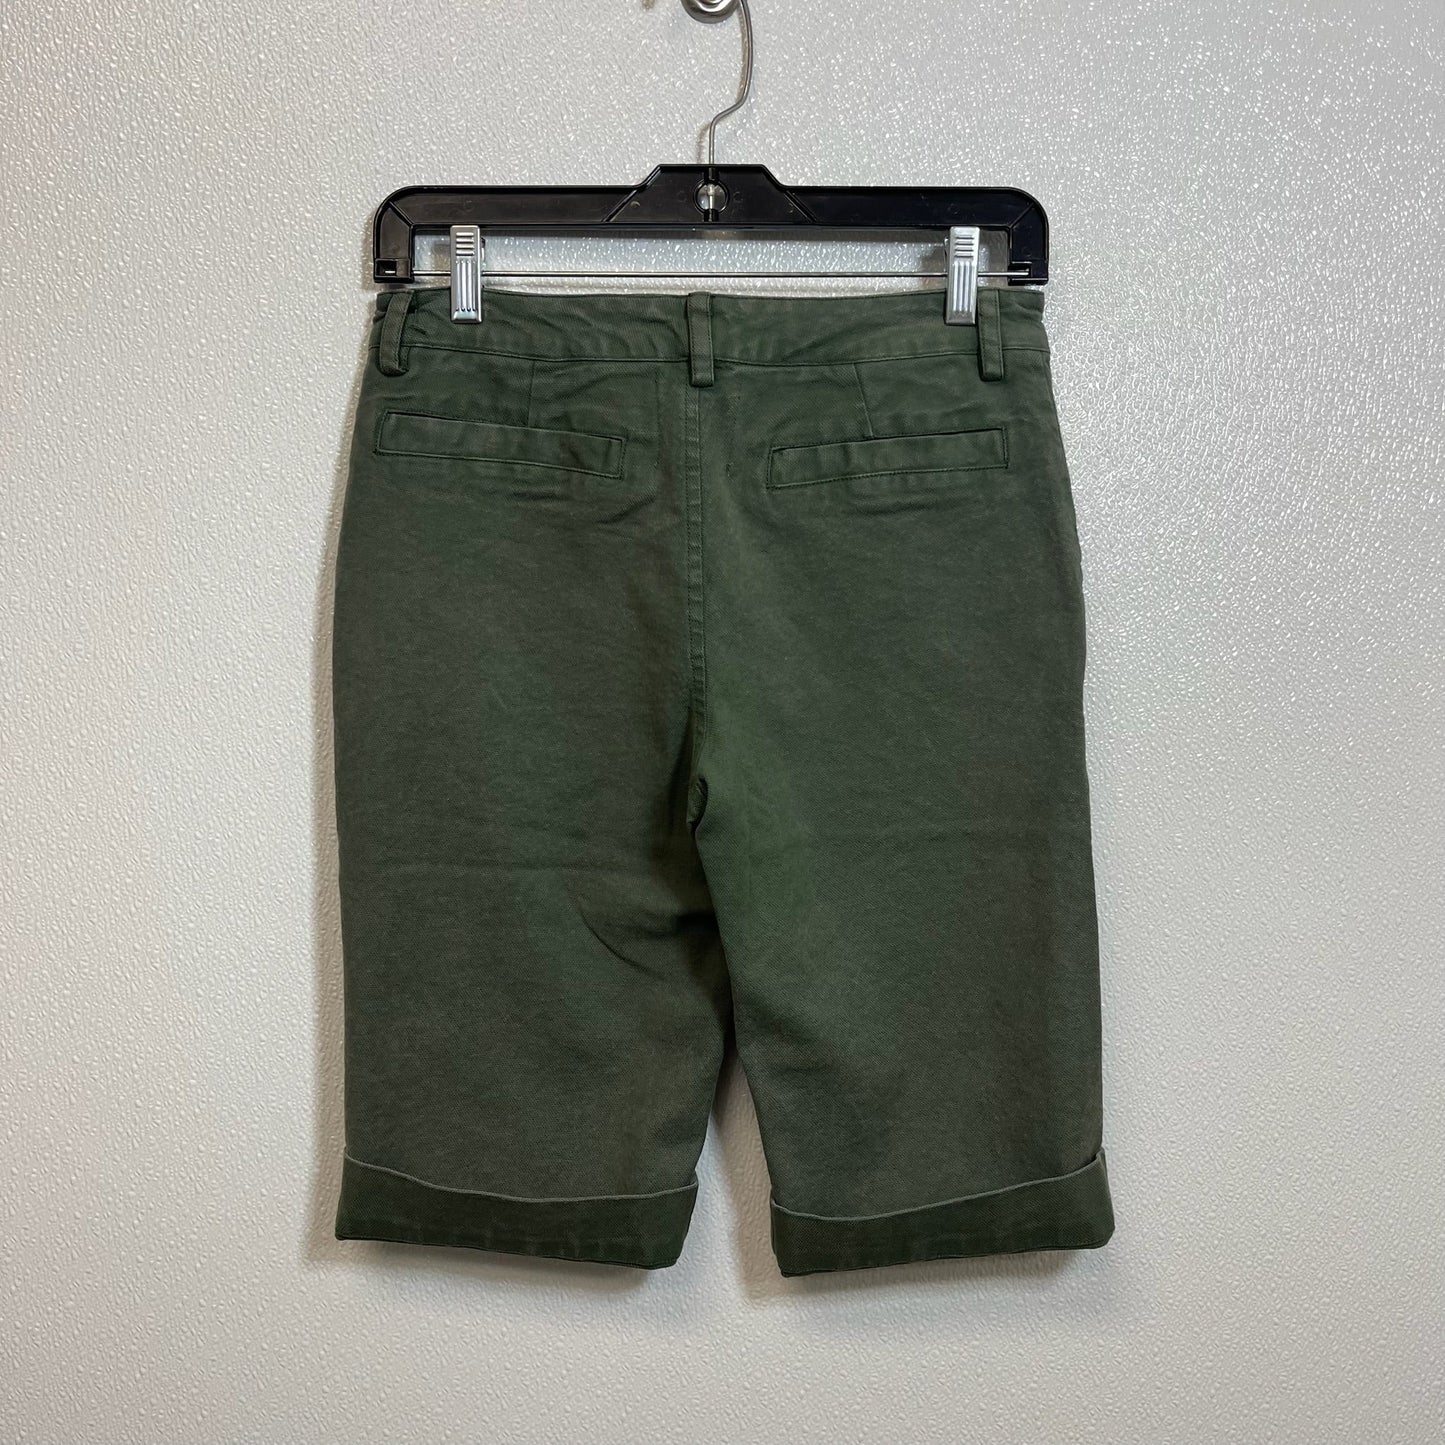 Olive Shorts Chaser, Size S